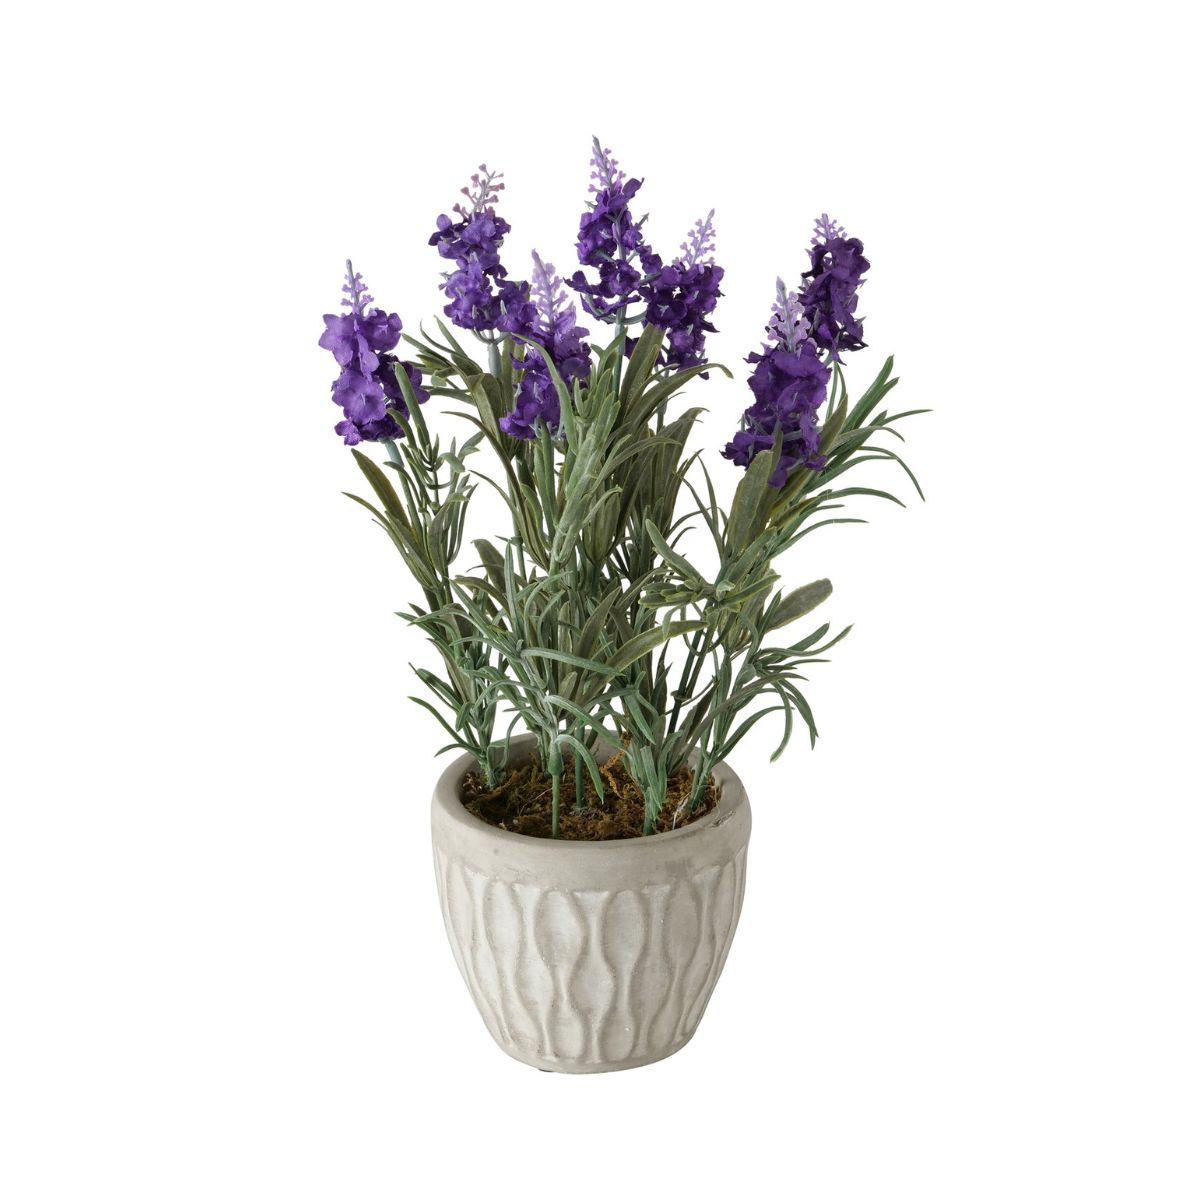 DECORATIUNI INTERIOR - Decoratiune din plastic 32 cm lavanda in ghiveci Lavendel Boltze, hectarul.ro